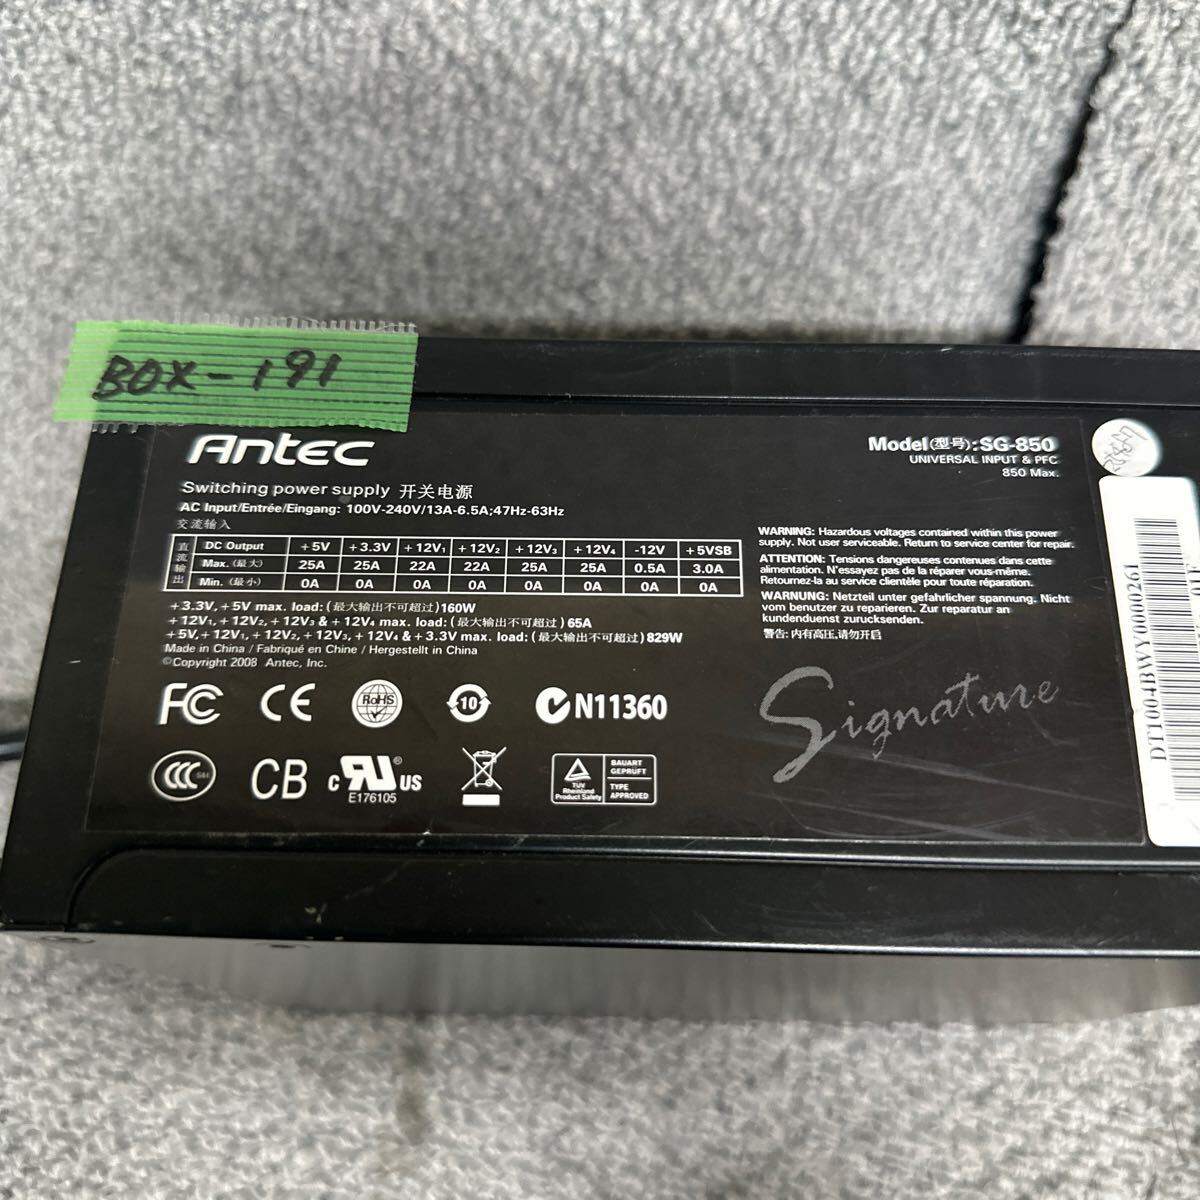 GK супер-скидка BOX-191 PC источник питания BOX Antec SG-850 Signature 829W источник питания напряжение подтверждено б/у товар 